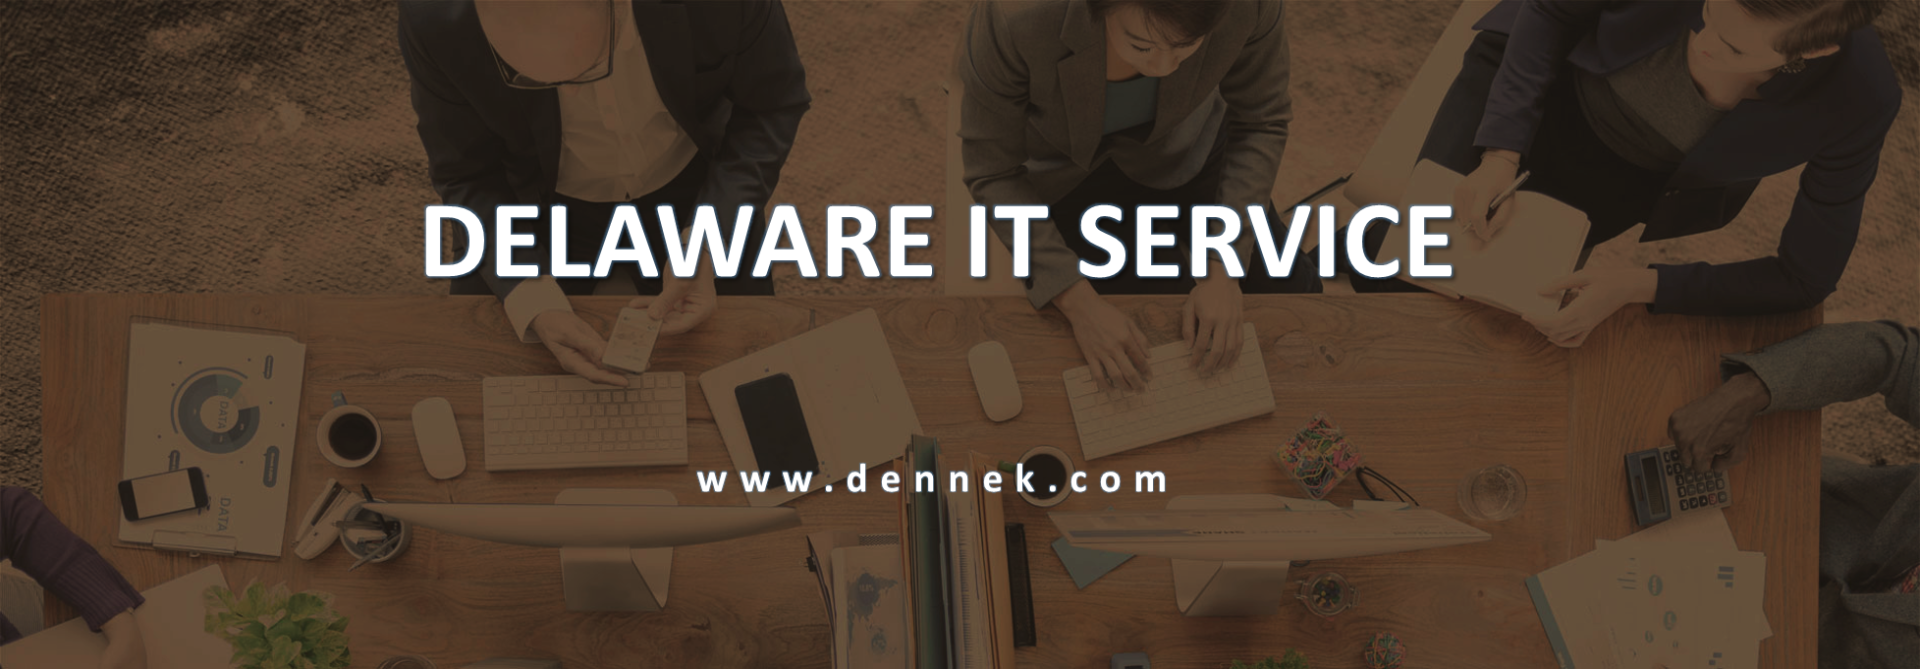 Delaware IT Services